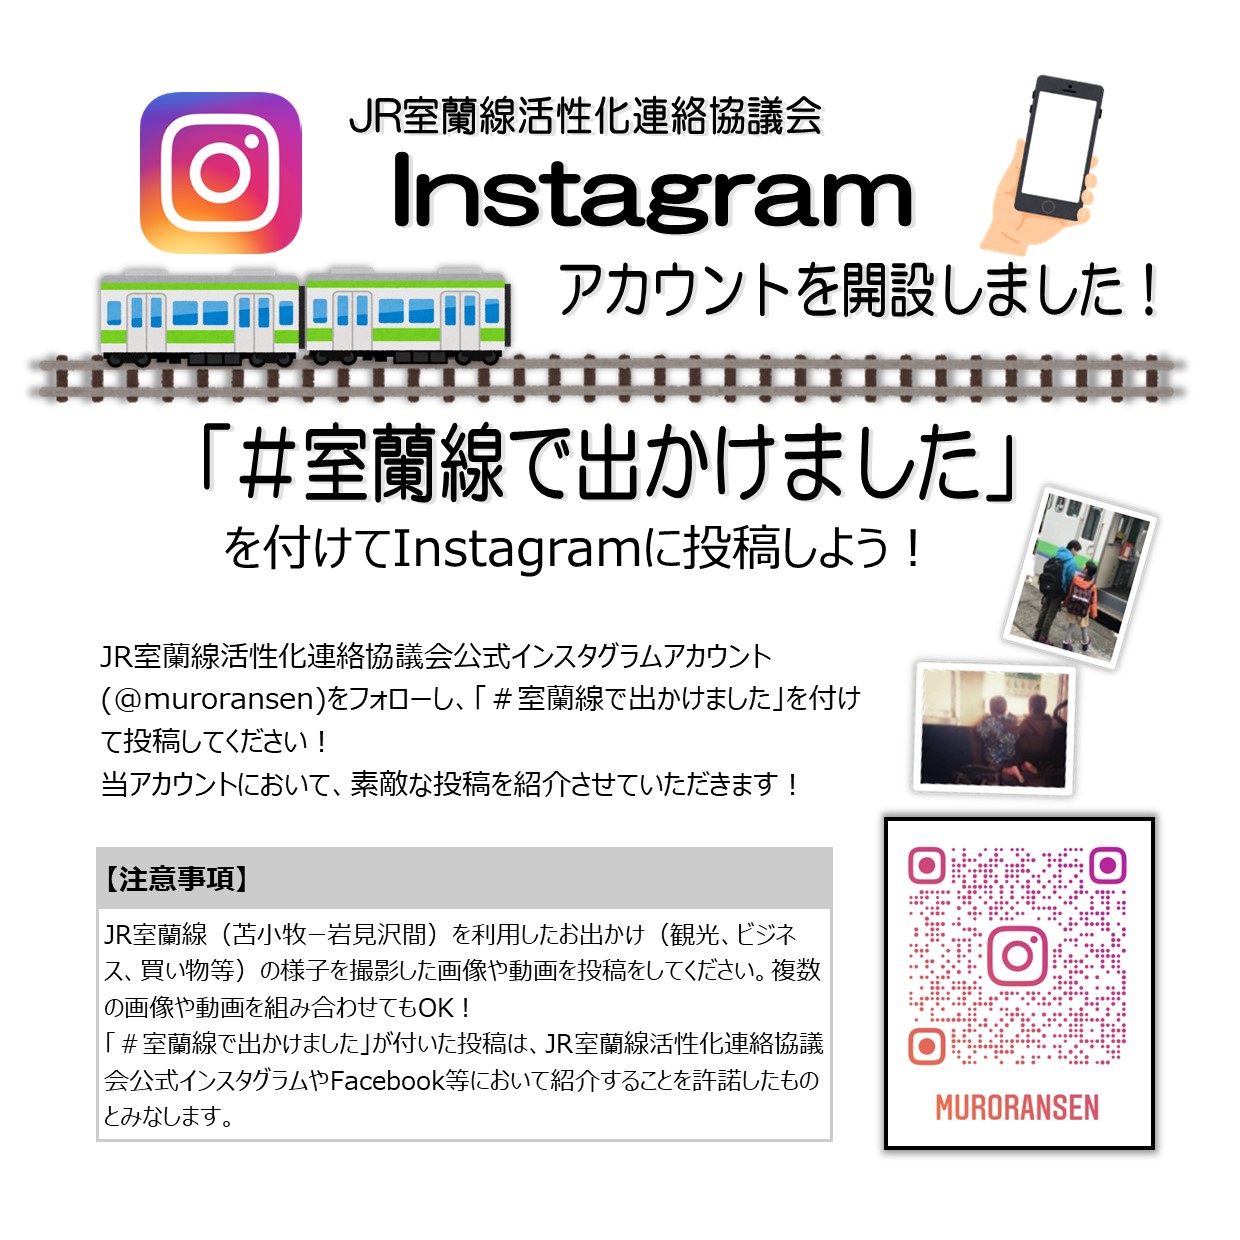 JR室蘭線活性化連絡協議会Instagram紹介のチラシ 詳細は以下